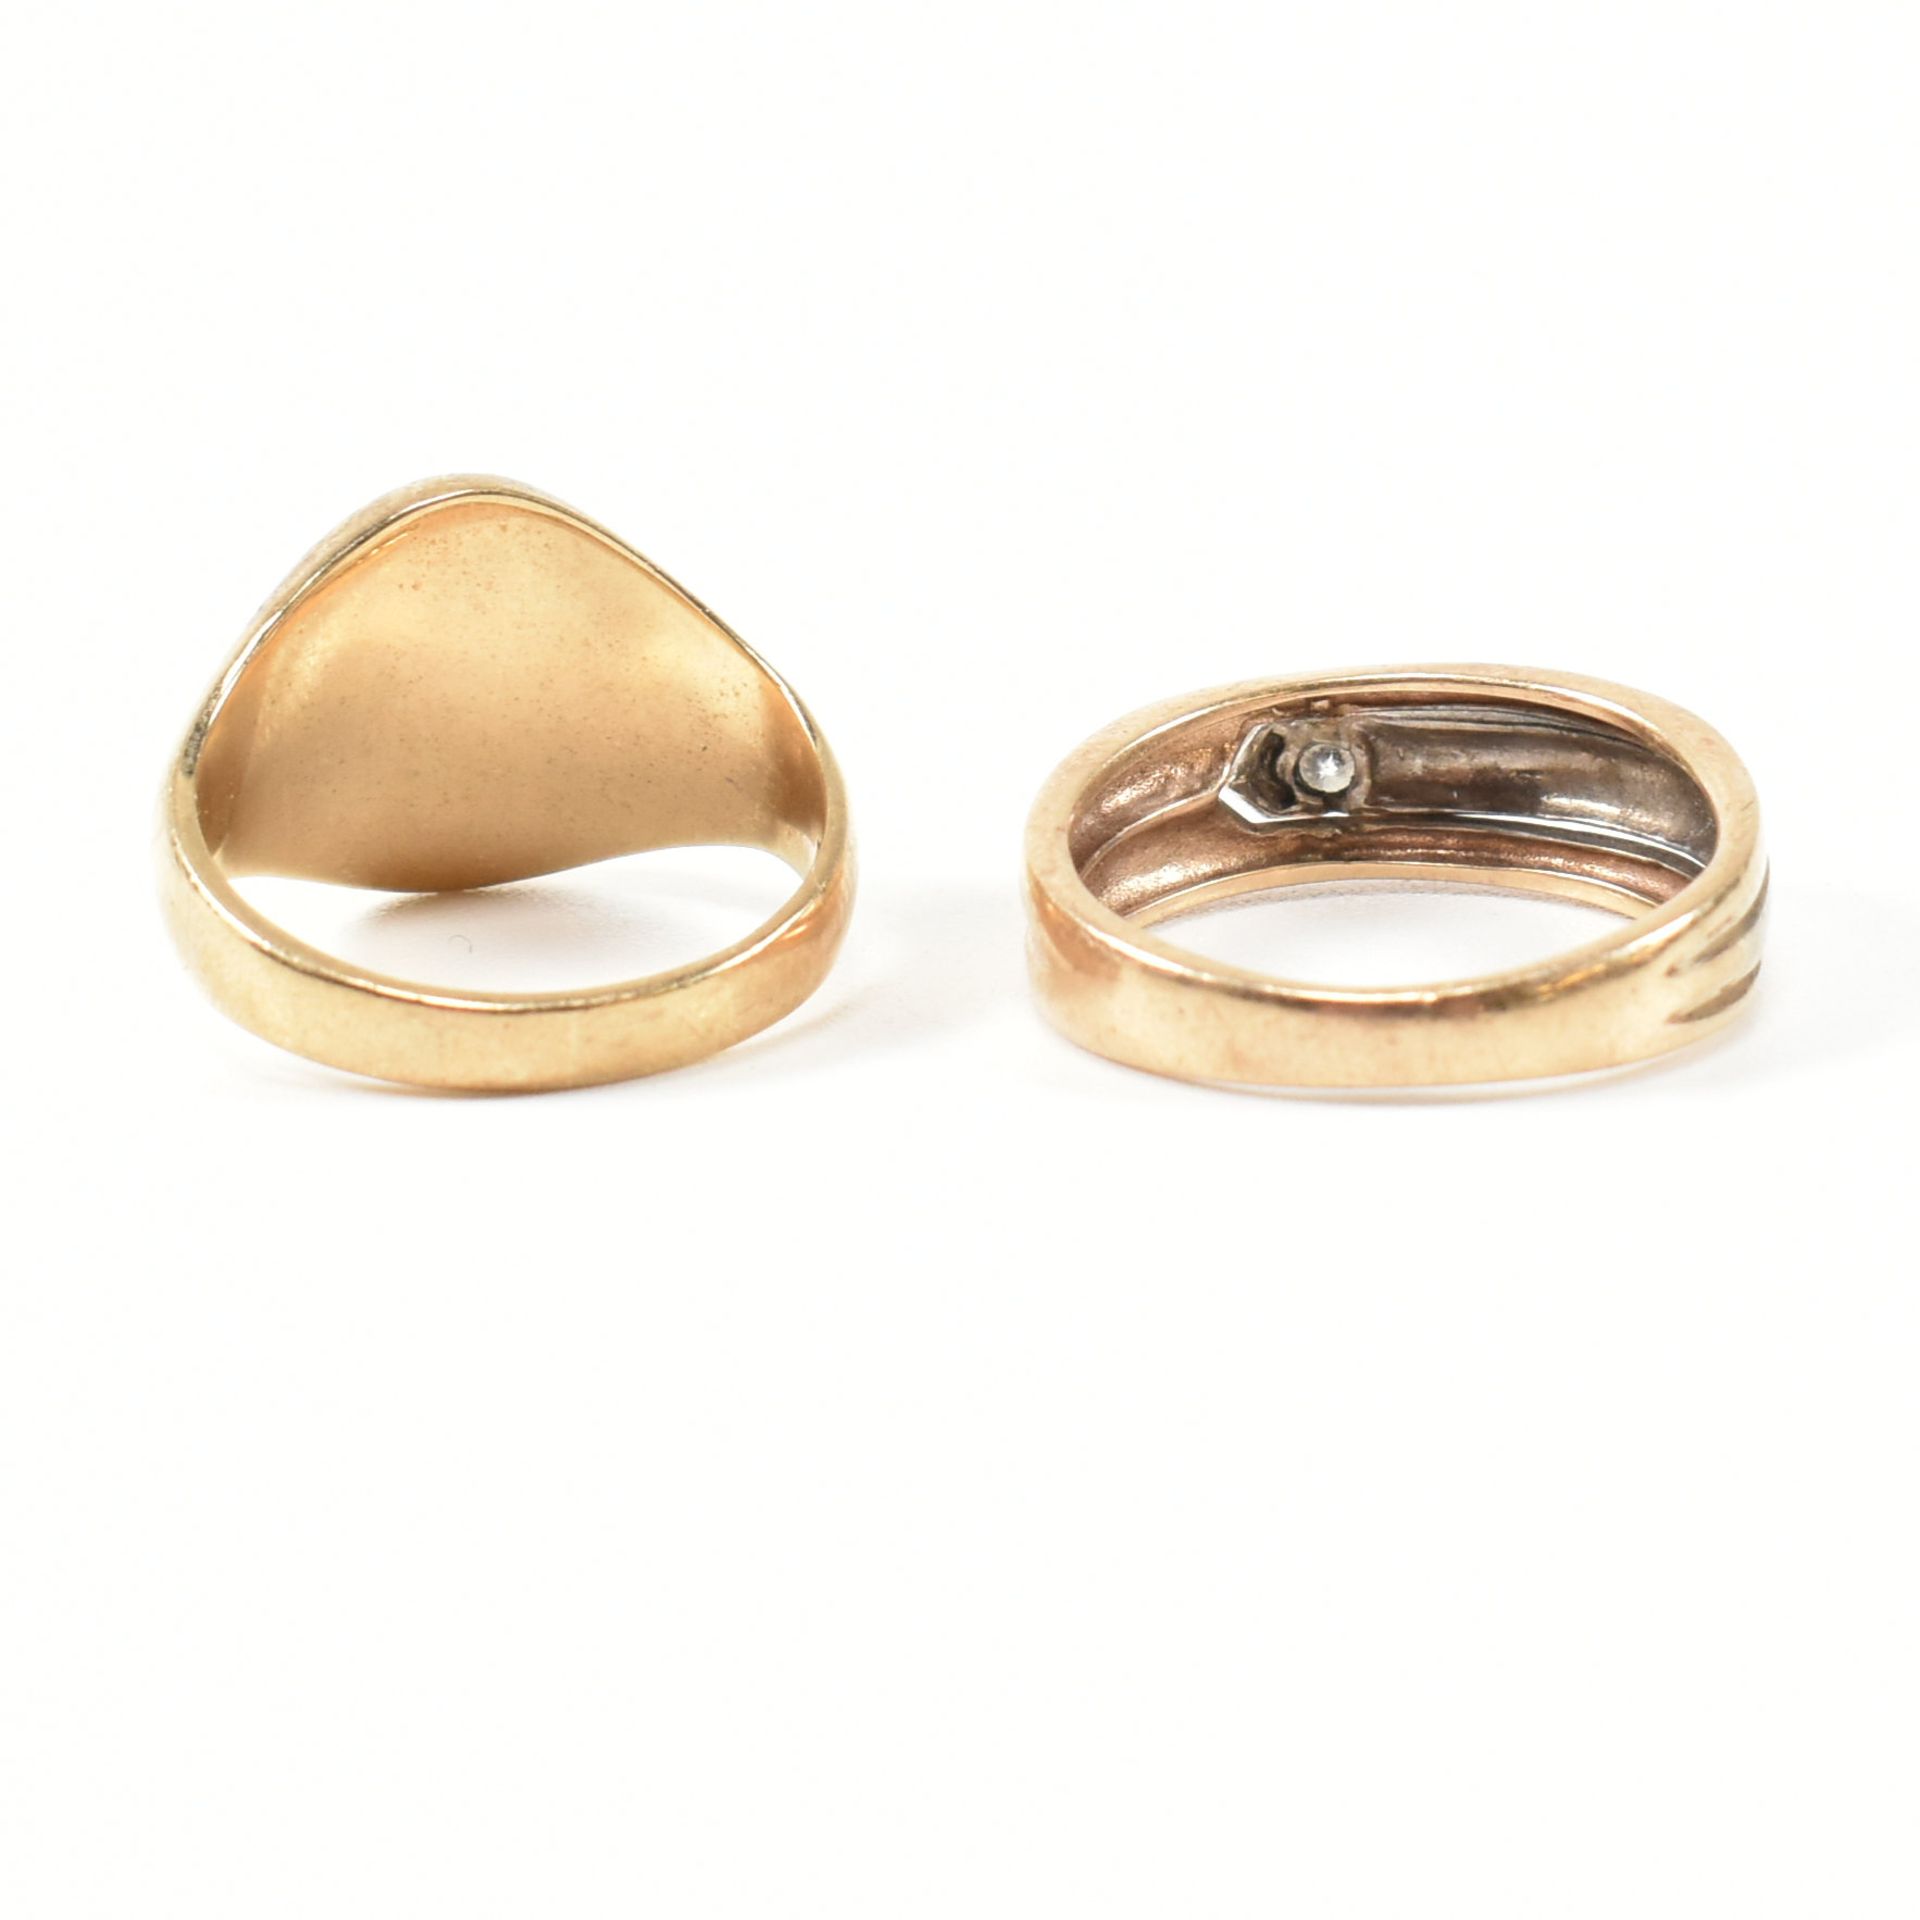 HALLMARKED 9CT GOLD & DIAMOND RING & HALLMARKED 9CT GOLD SIGNET RING - Image 4 of 8